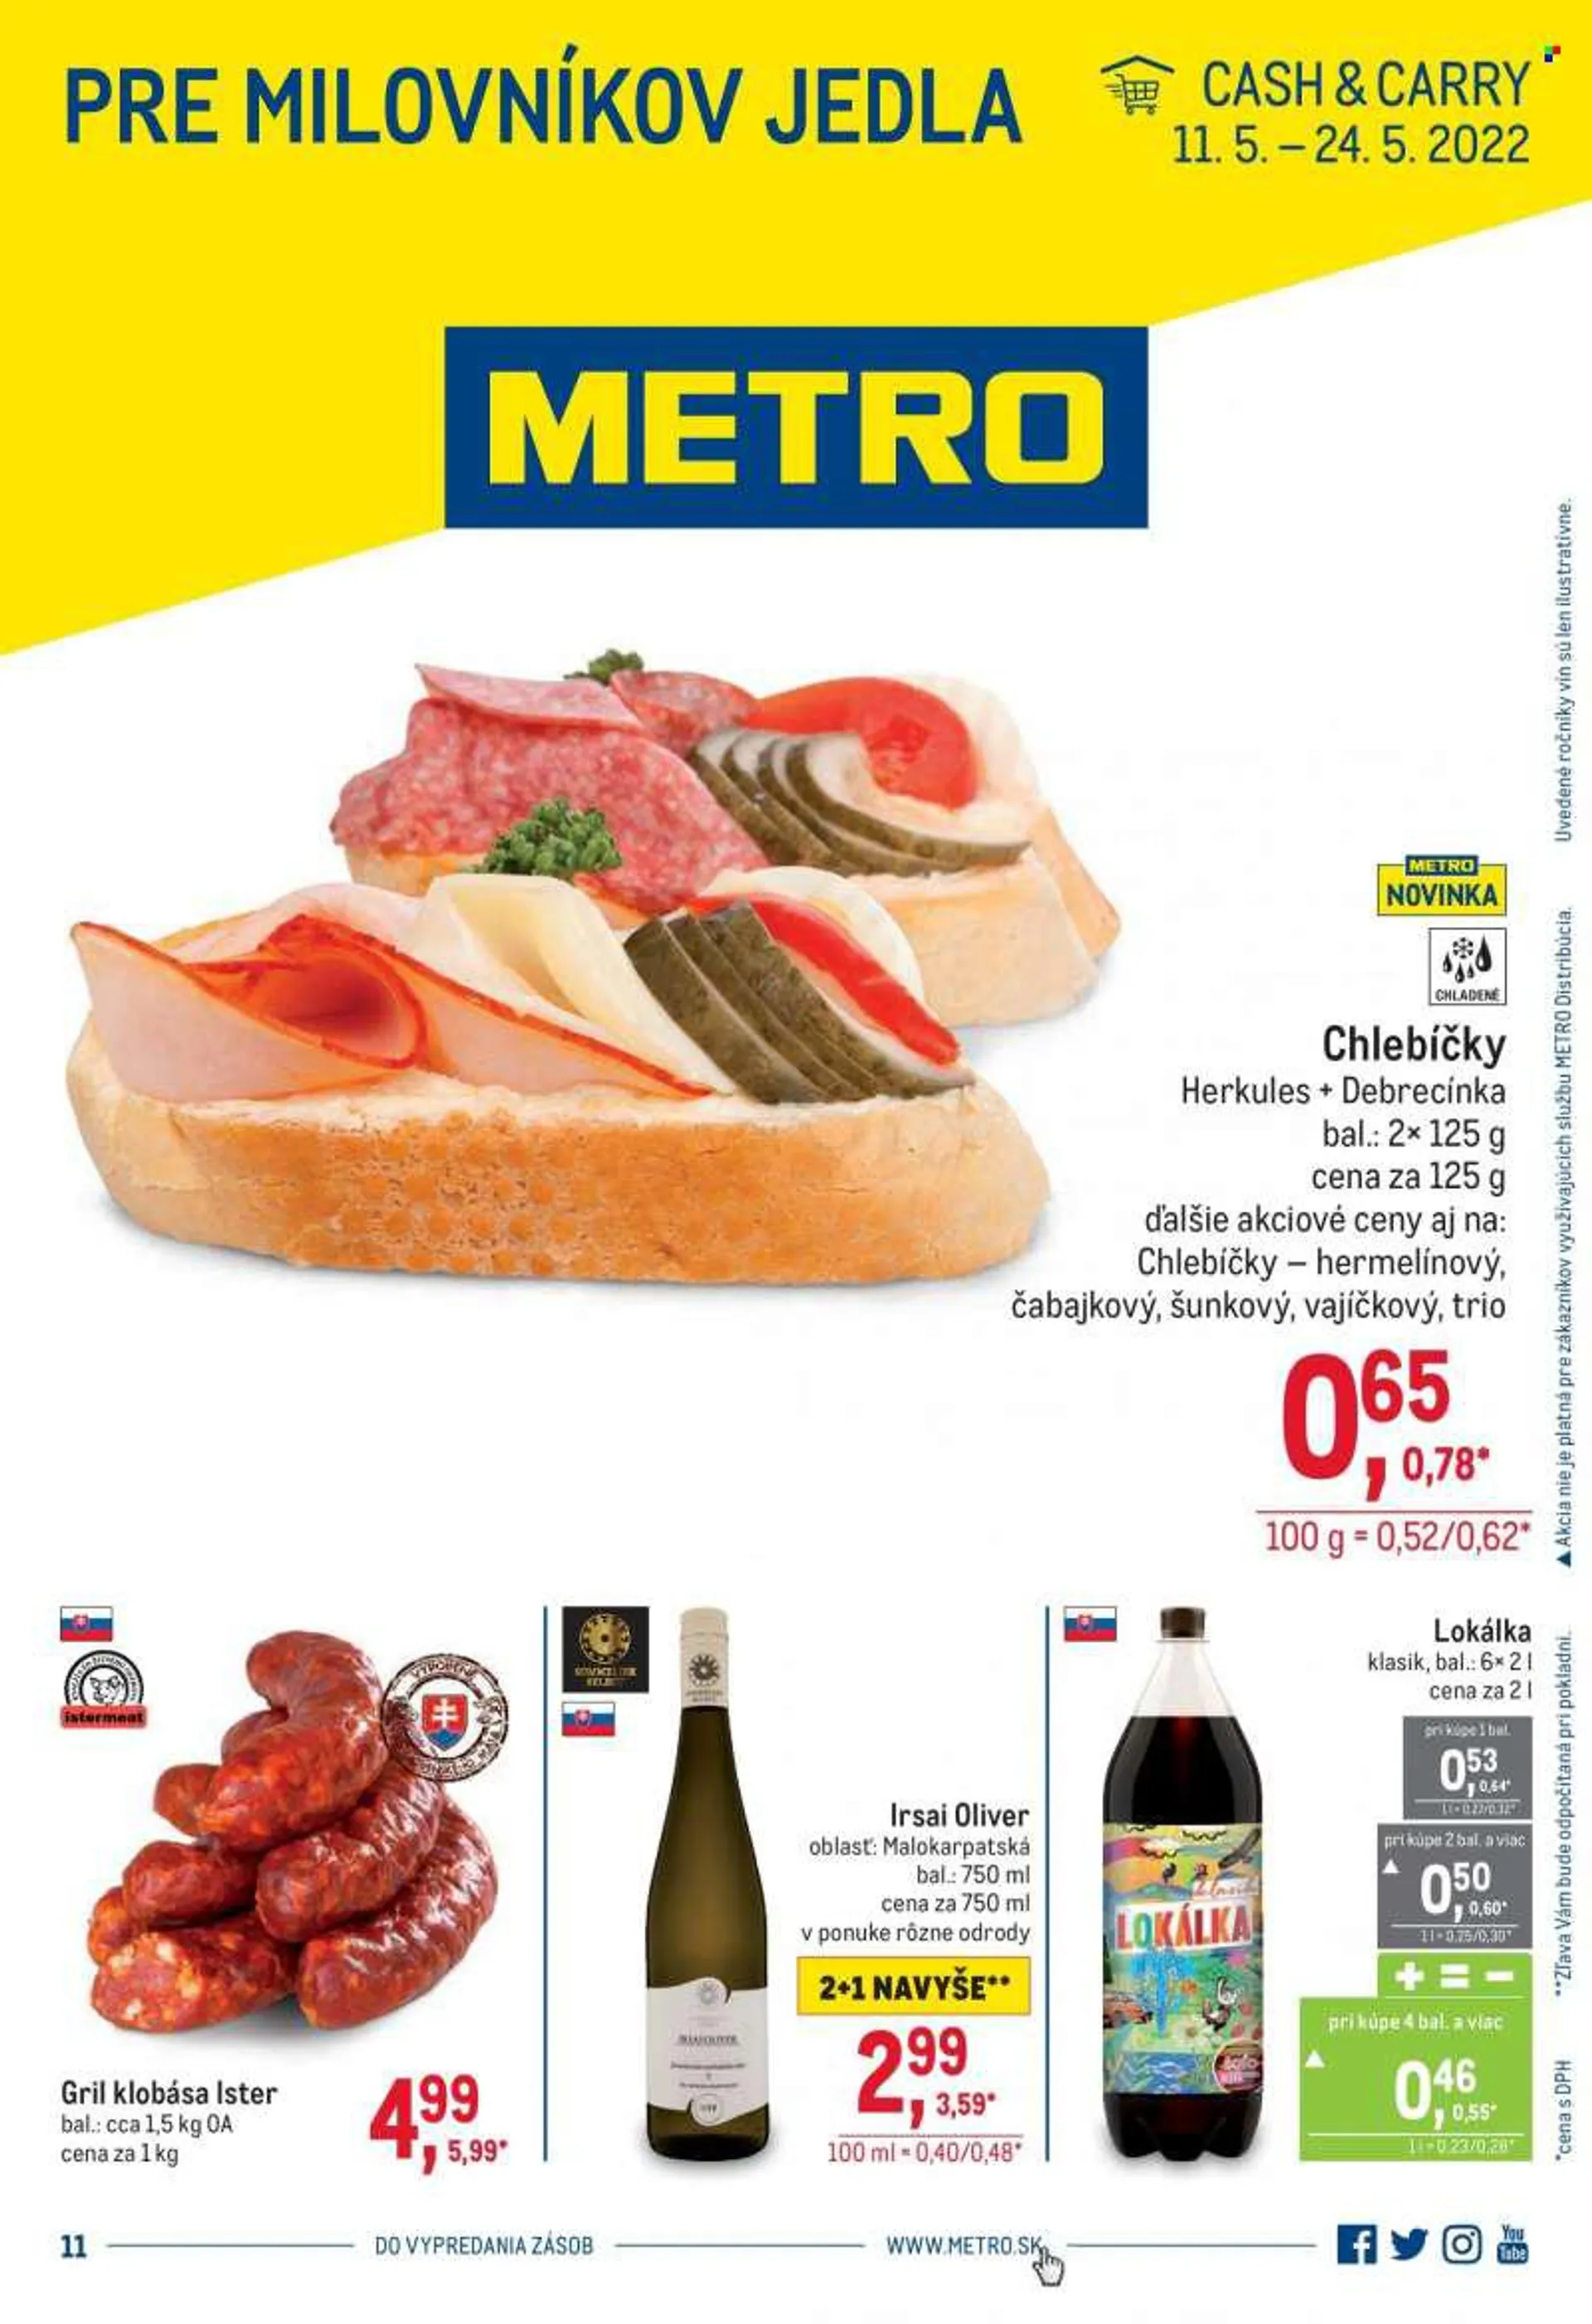 Leták Metro - 11.5.2022 - 24.5.2022. - 11. mája 24. mája 2022 - Page 1